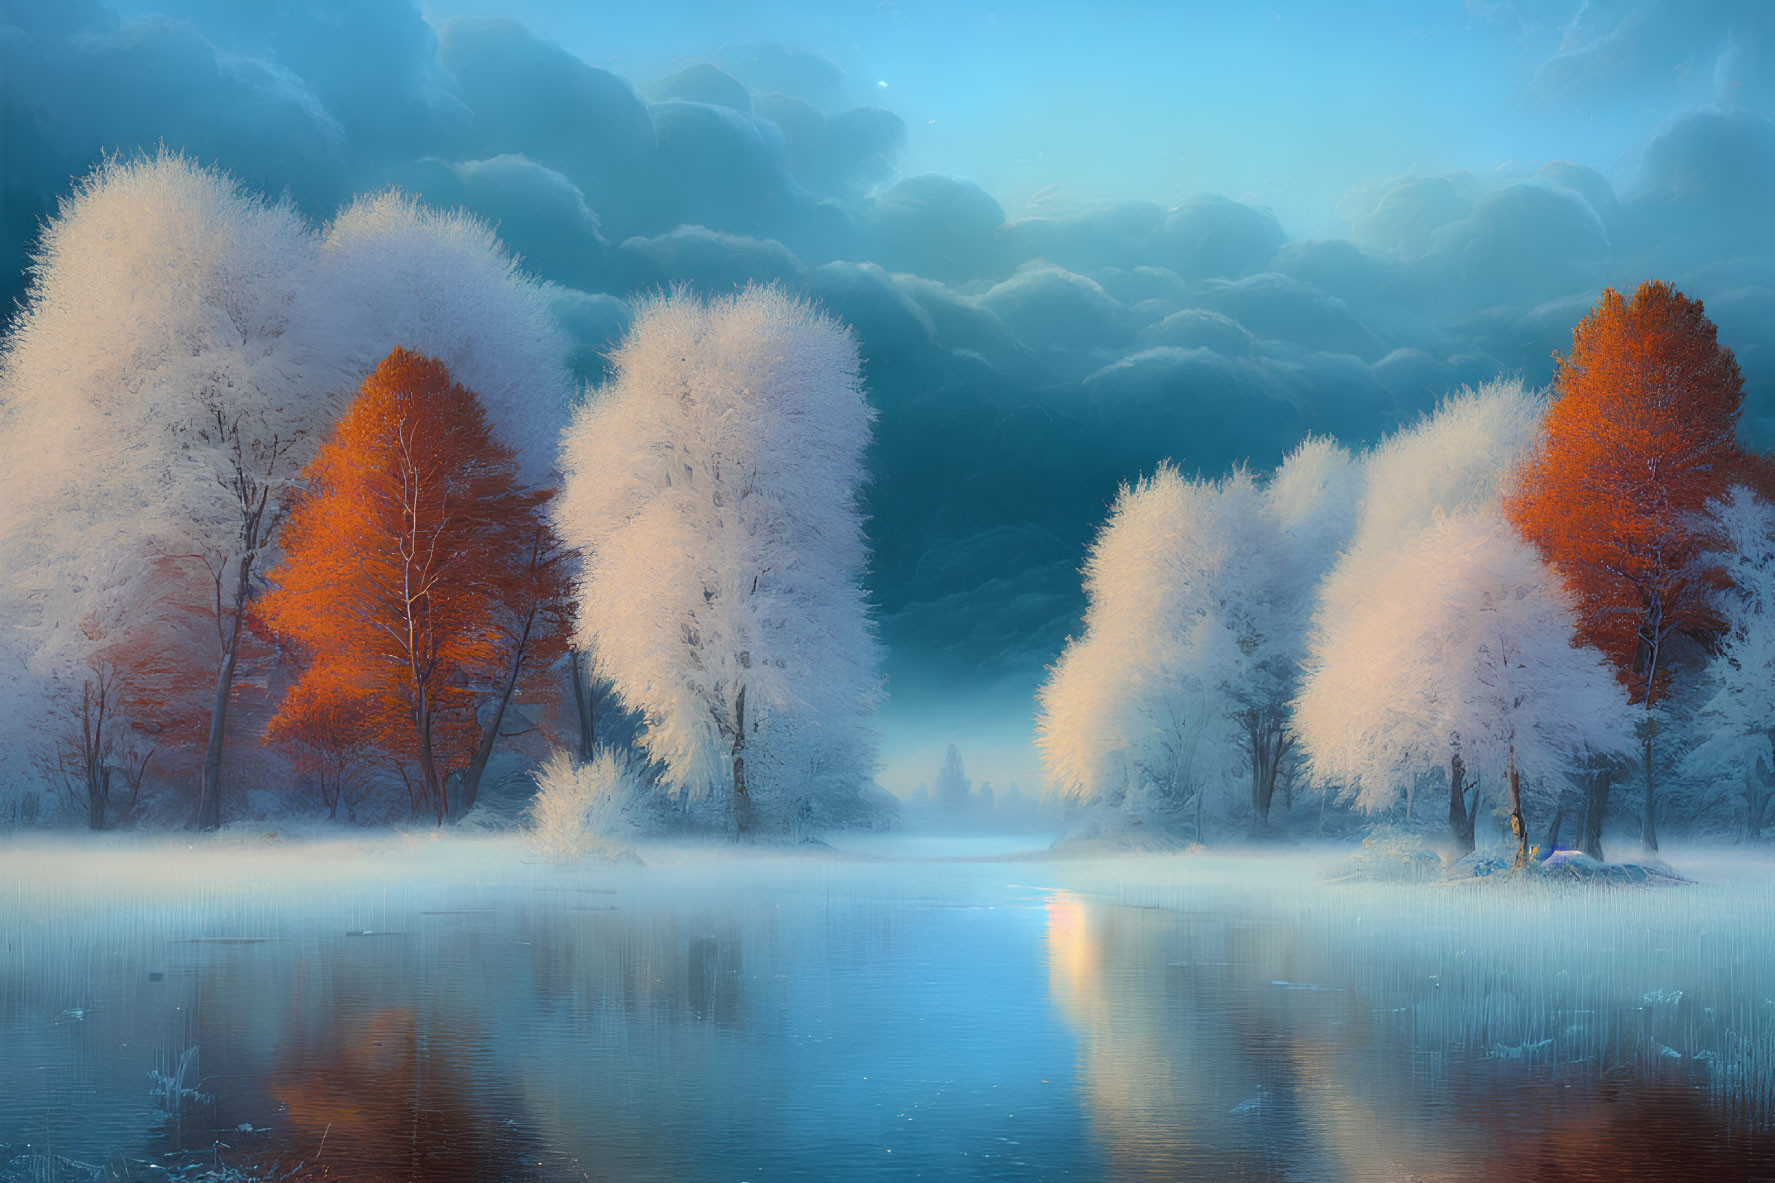 Tranquil winter landscape: frost-covered trees, serene lake, gentle sunrise